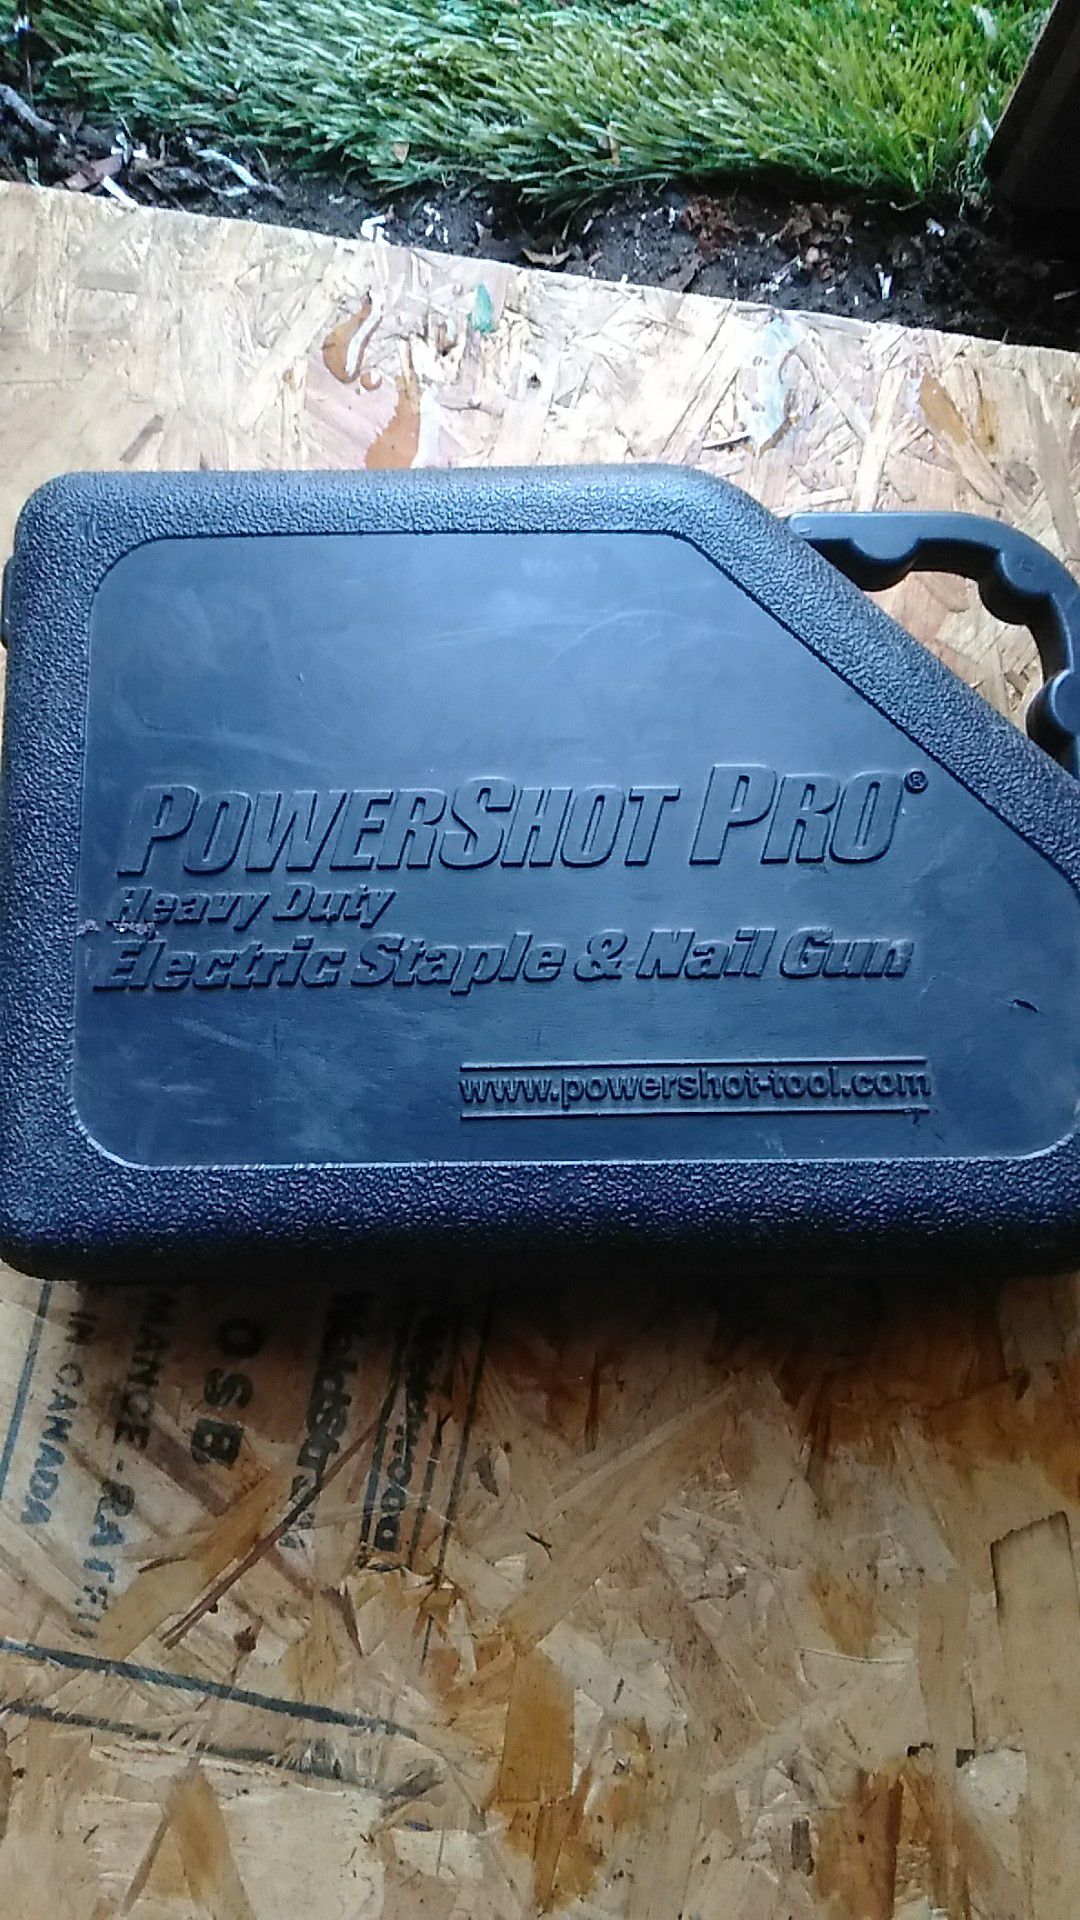 PowerShot pro heavy duty electric stapler and nail gun